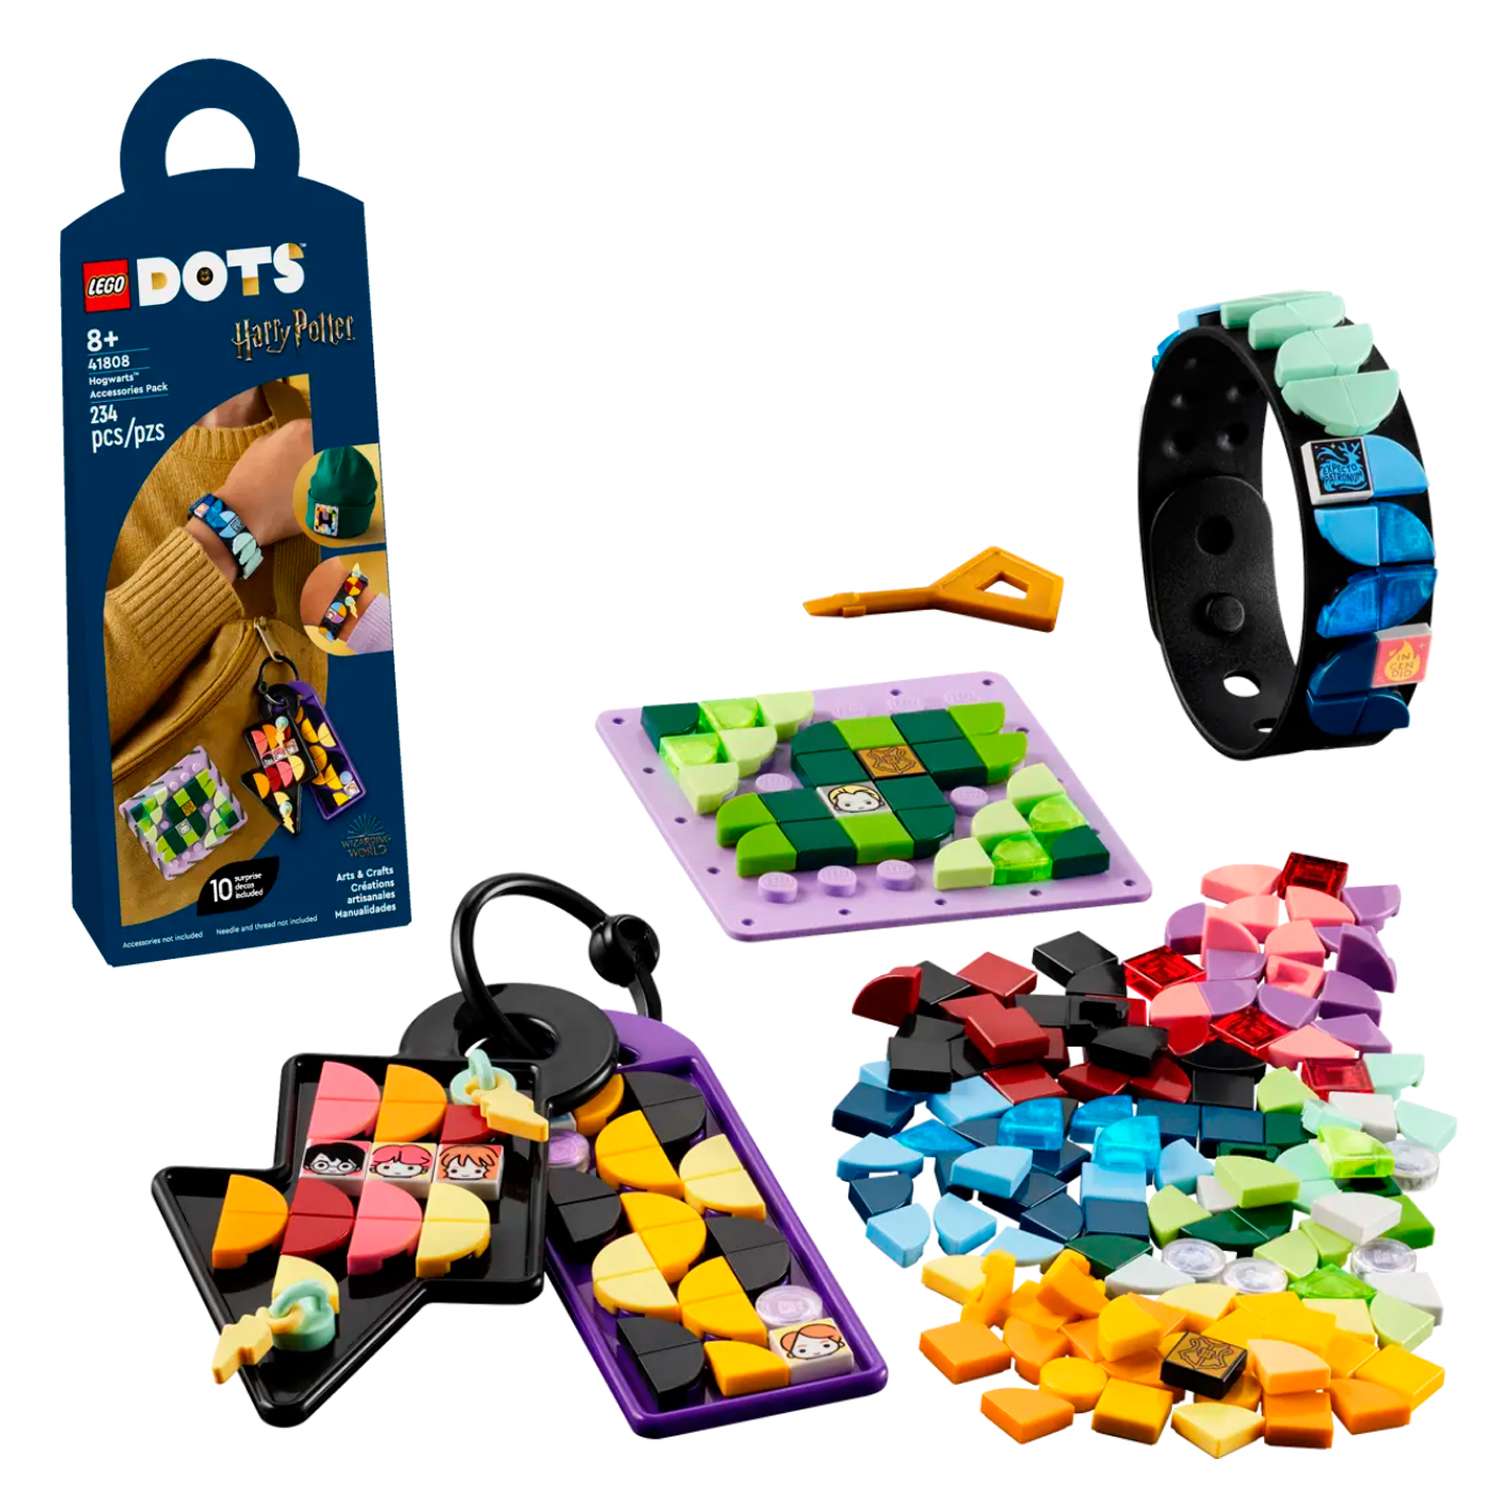 Конструктор детский LEGO Dots Набор аксессуаров Хогвартс 41808 - фото 1